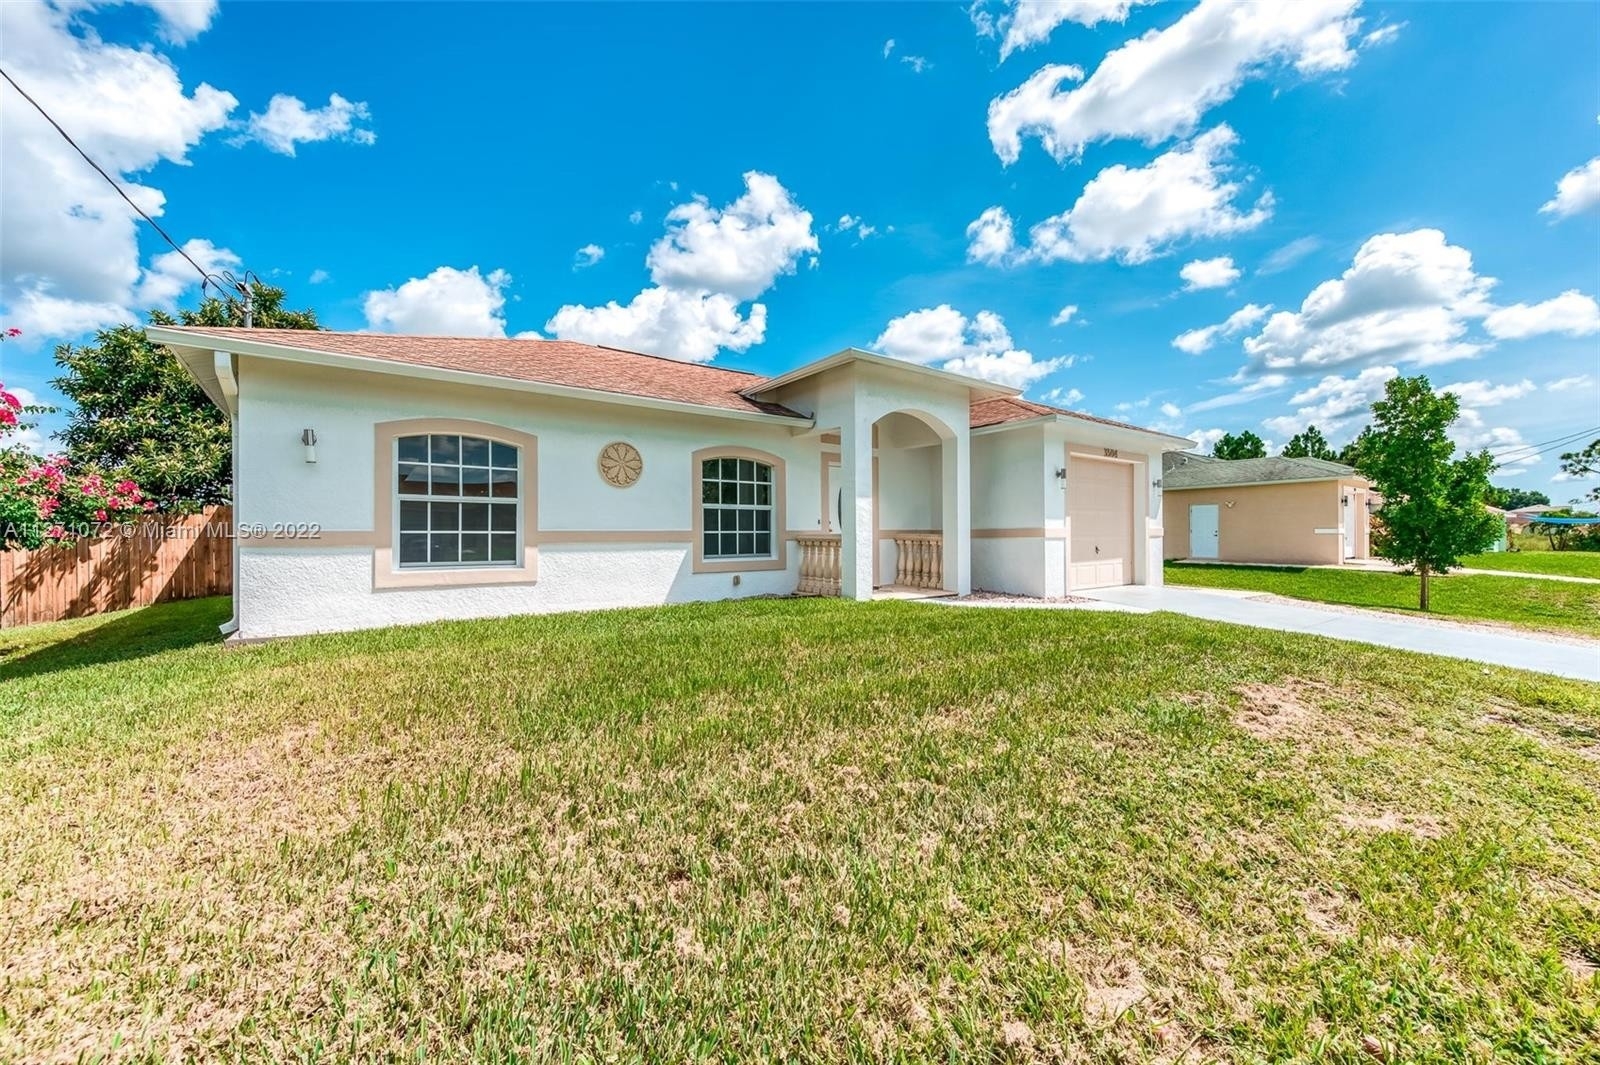 Single Family Home for Sale at Sunshine, Lehigh Acres, FL 33976